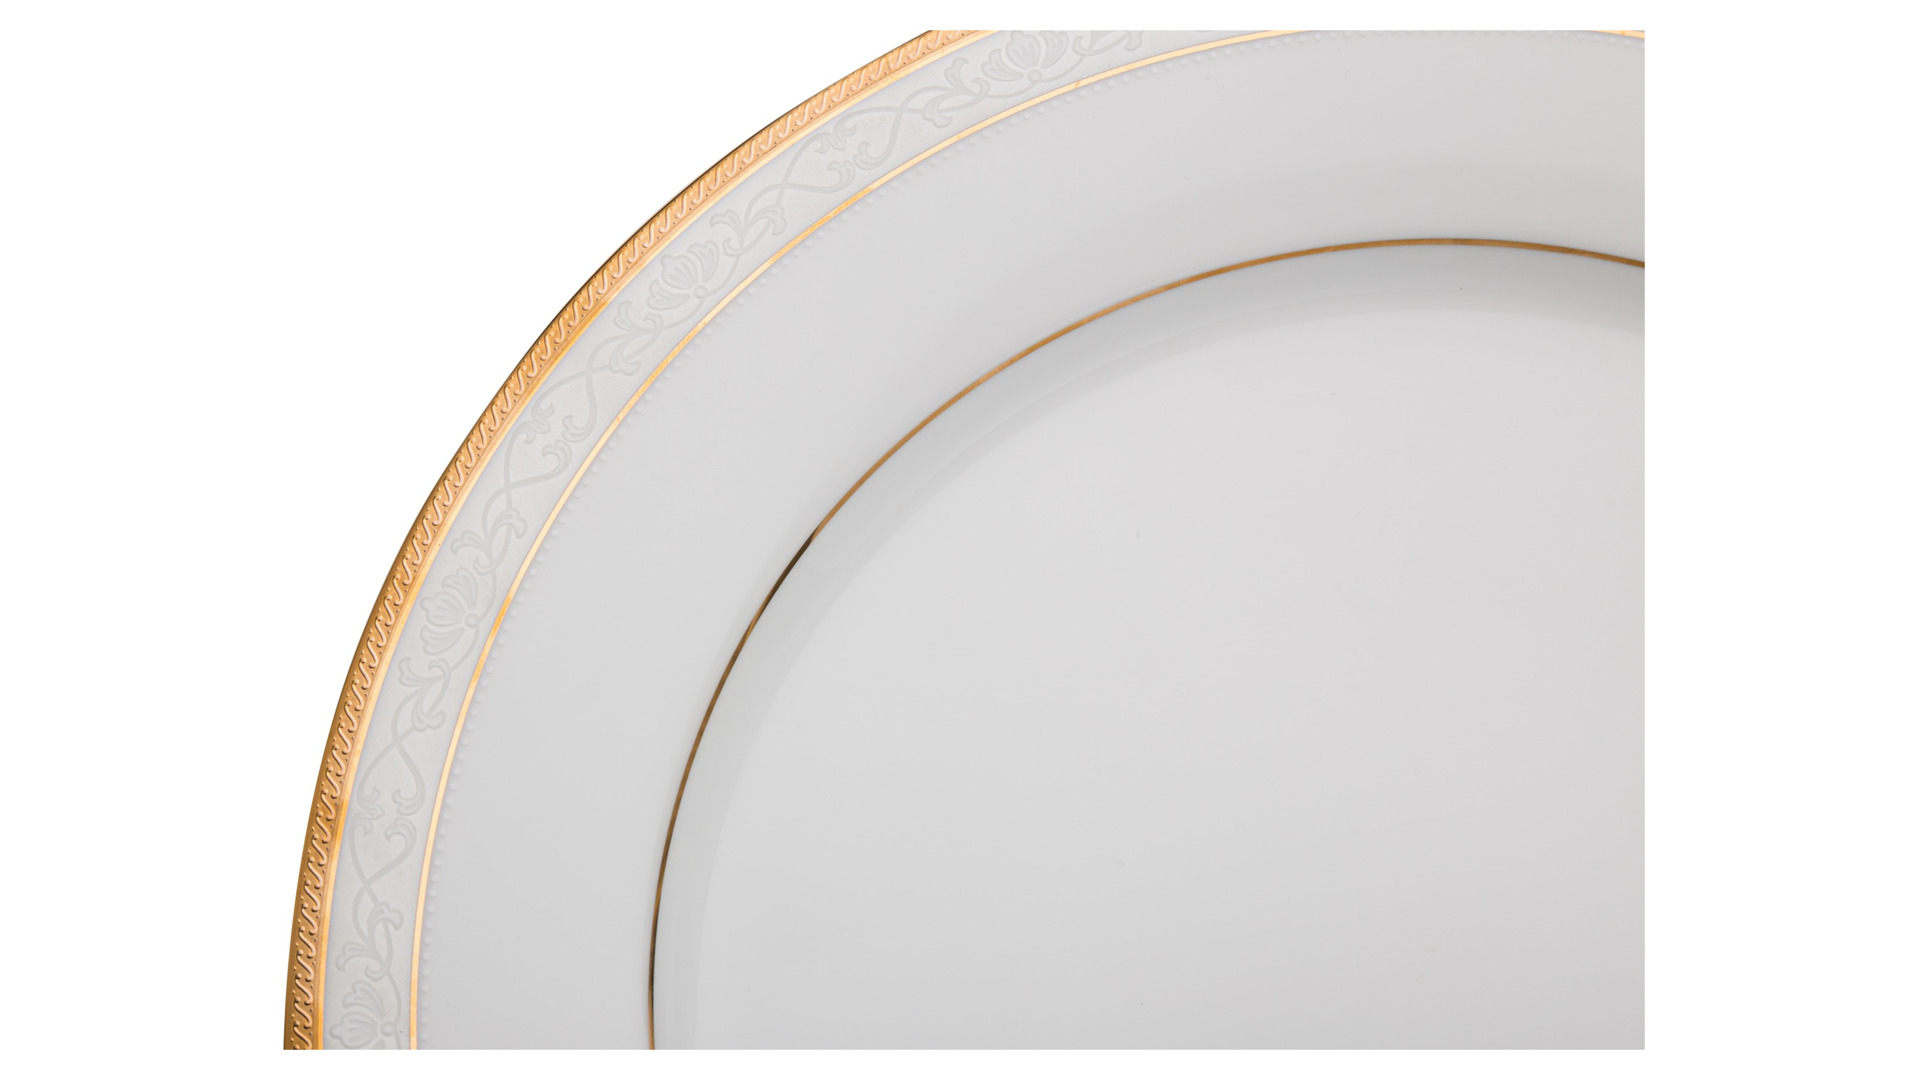 Тарелка обеденная Noritake Хэмпшир, золотой кант 27 см